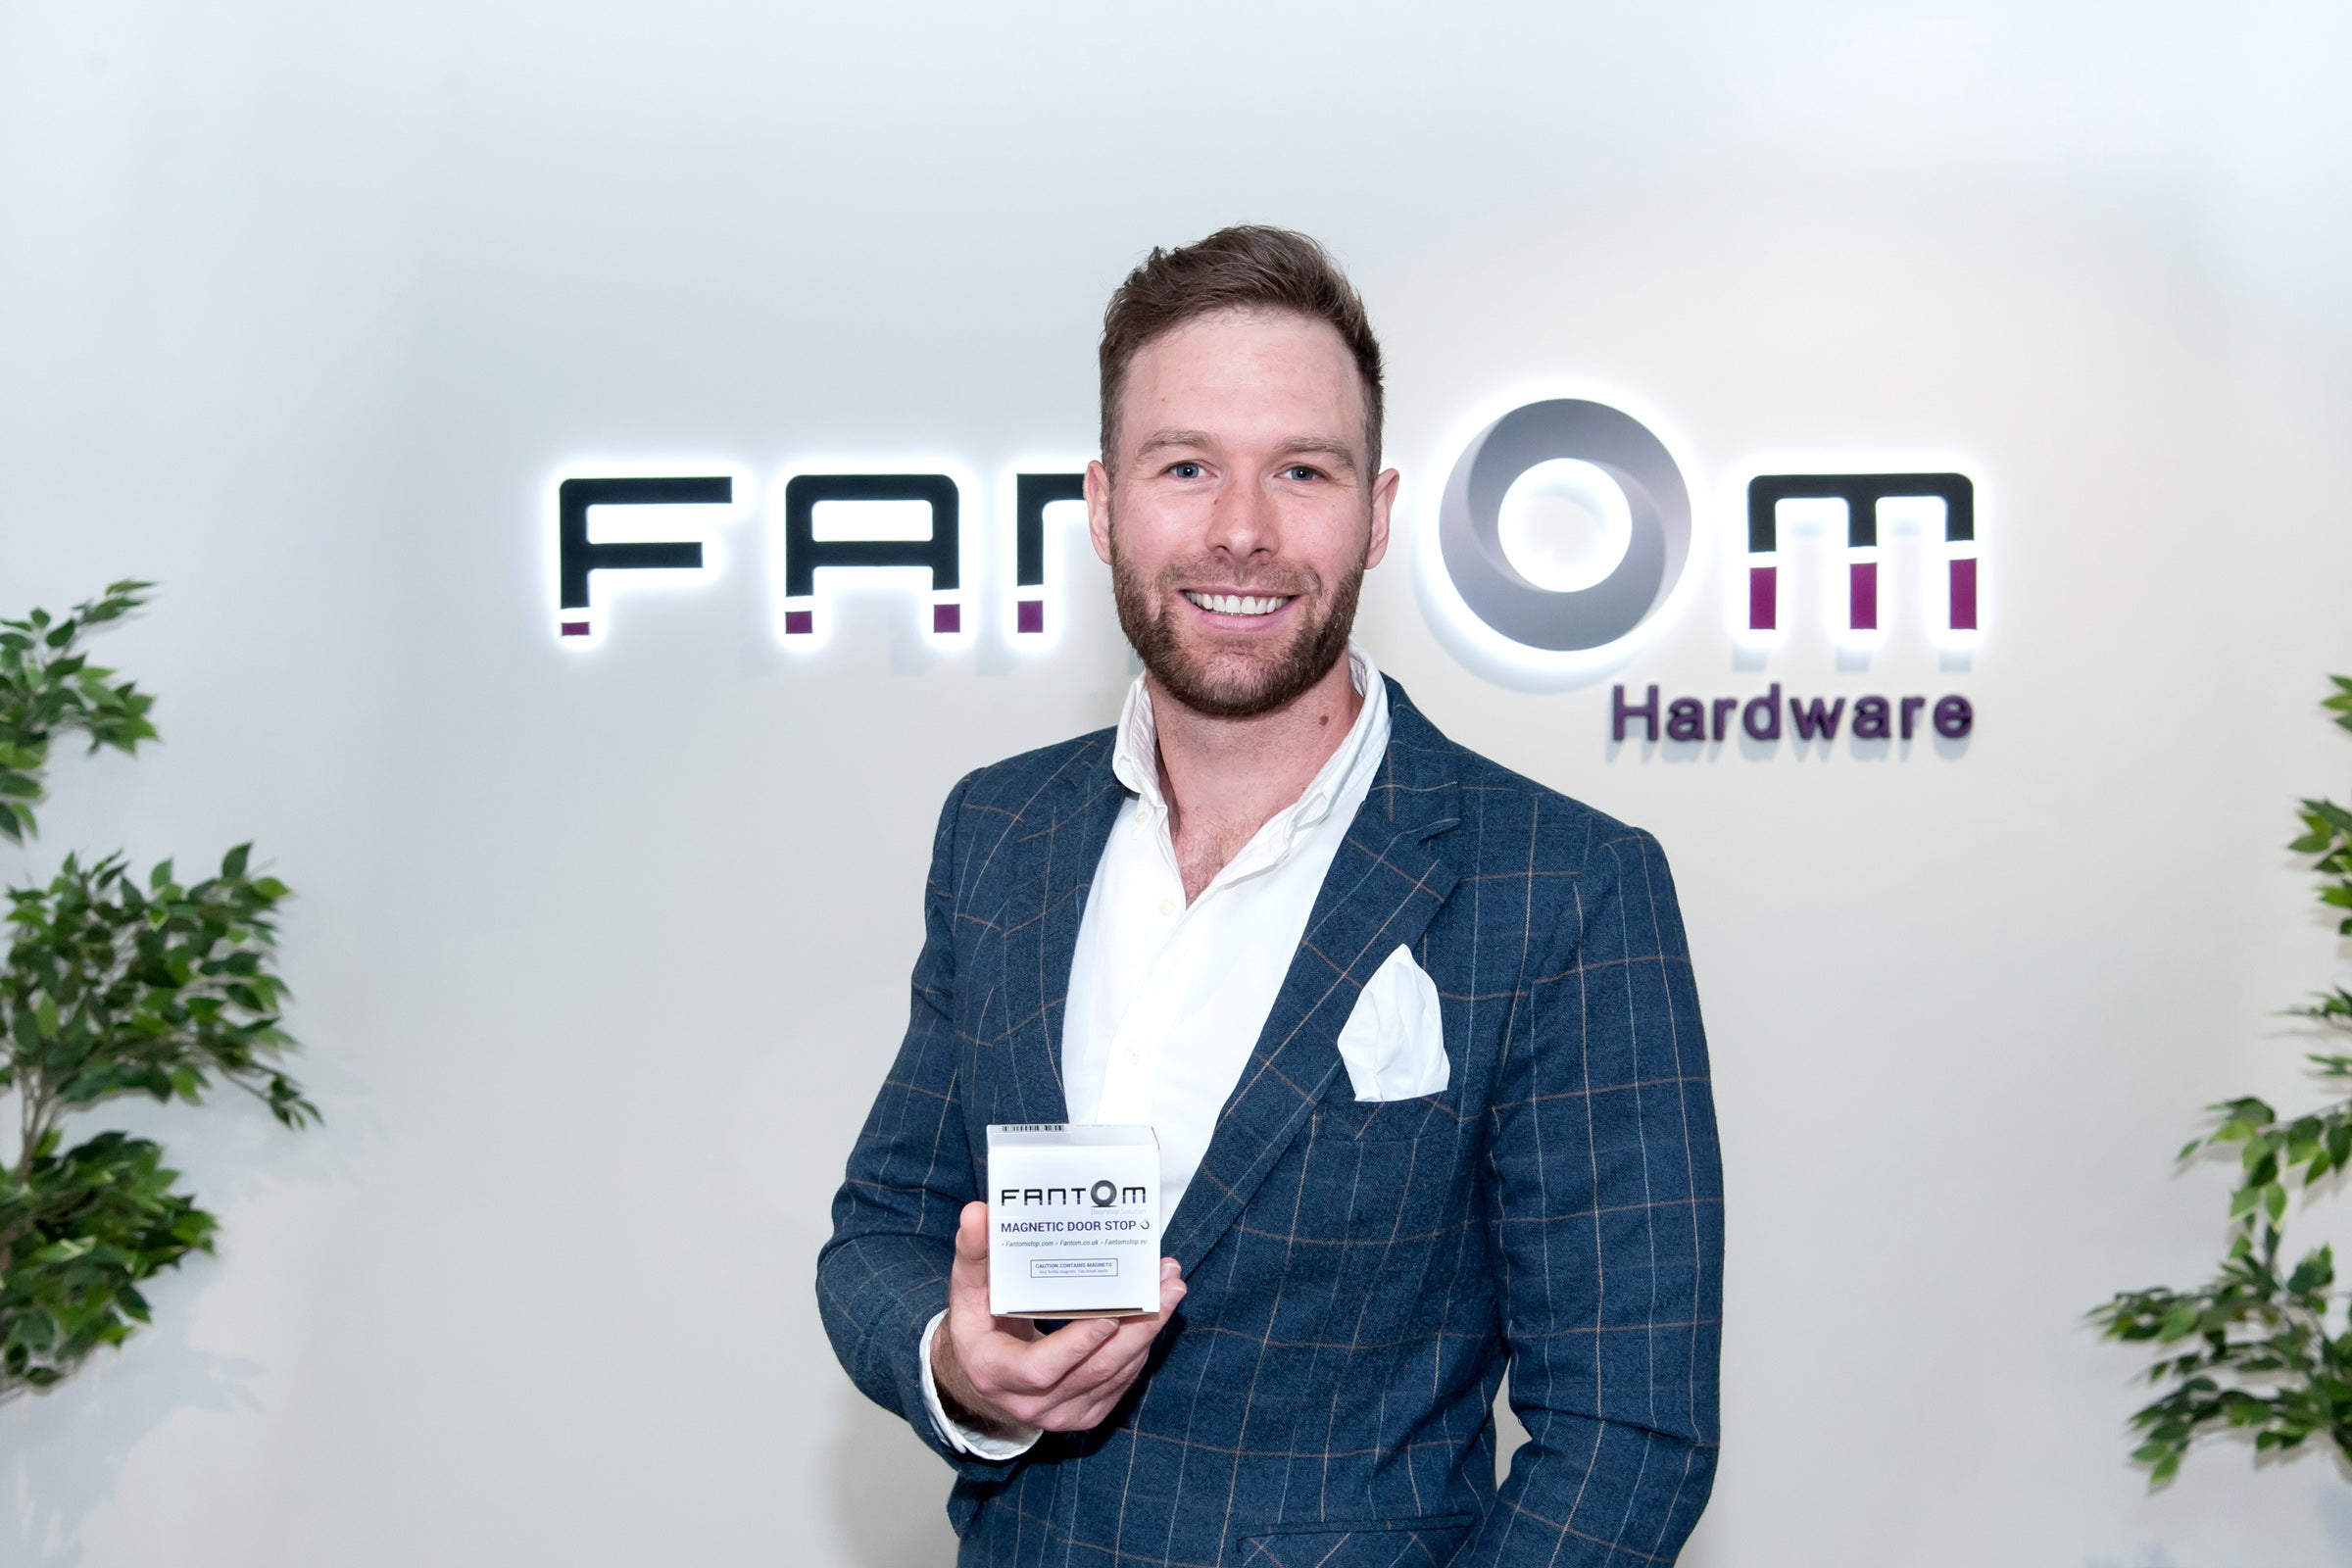 Fantom Doorstop - From One Store in Australia to Global Hardware Brand